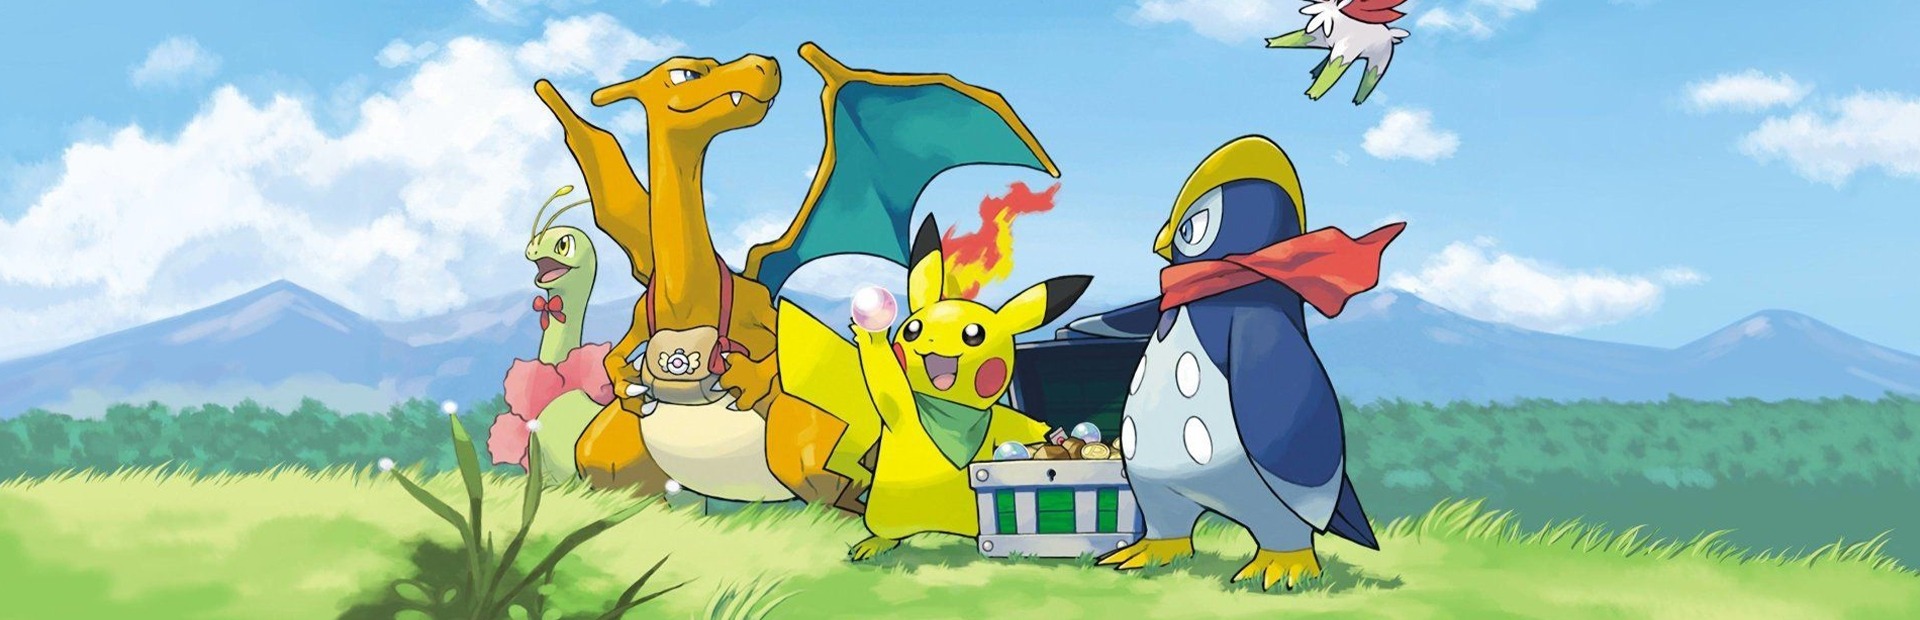 Comprar Pokémon Mundo Misterioso: Equipo de Rescate DX + Funda